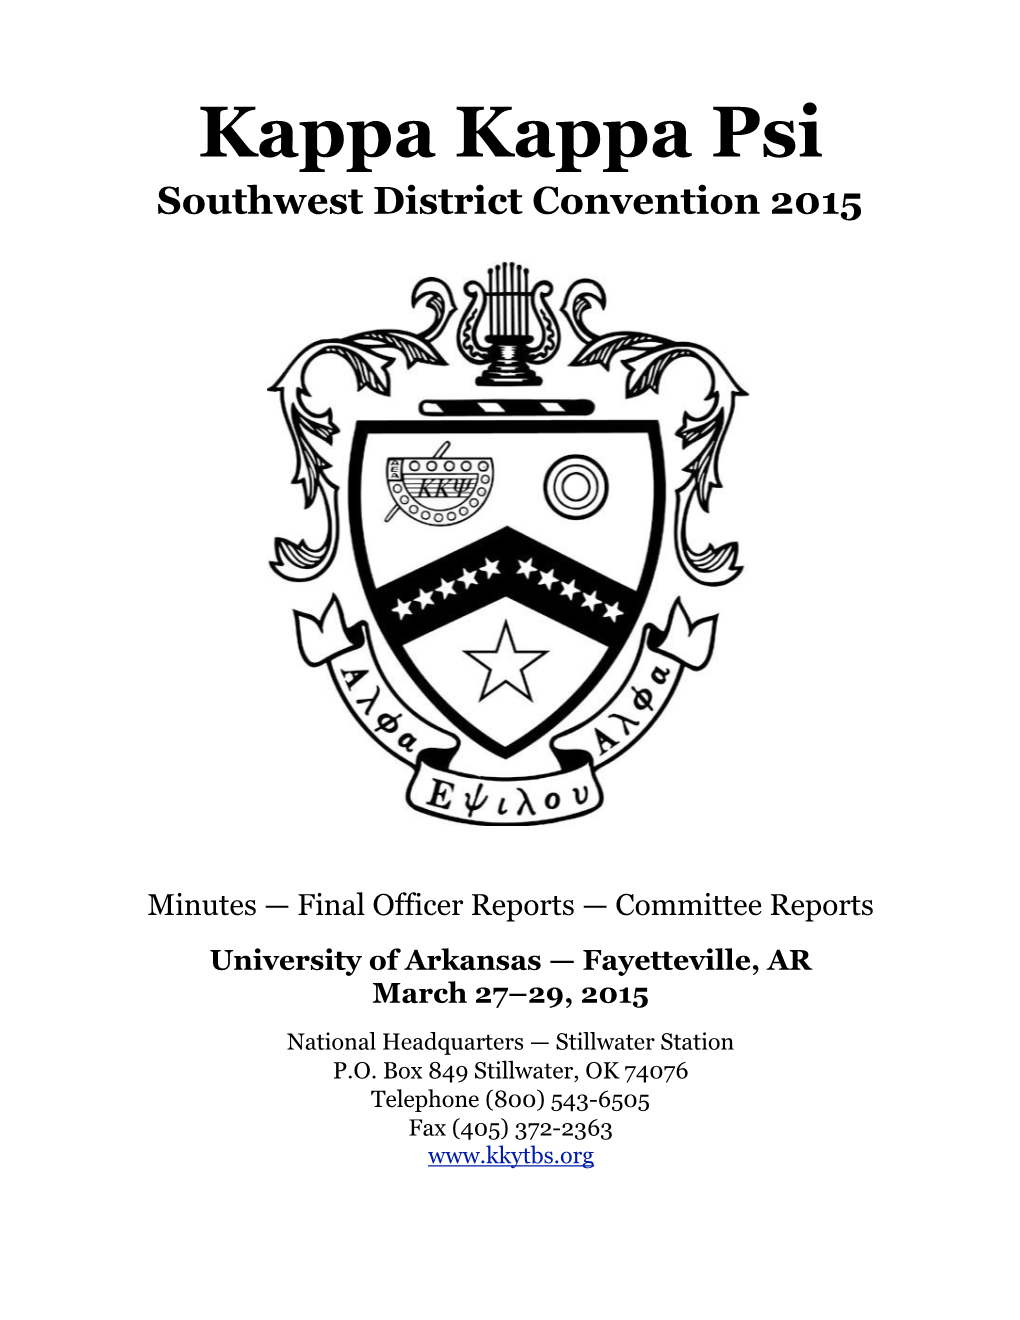 Kappa Kappa Psi Southwest District Convention 2015